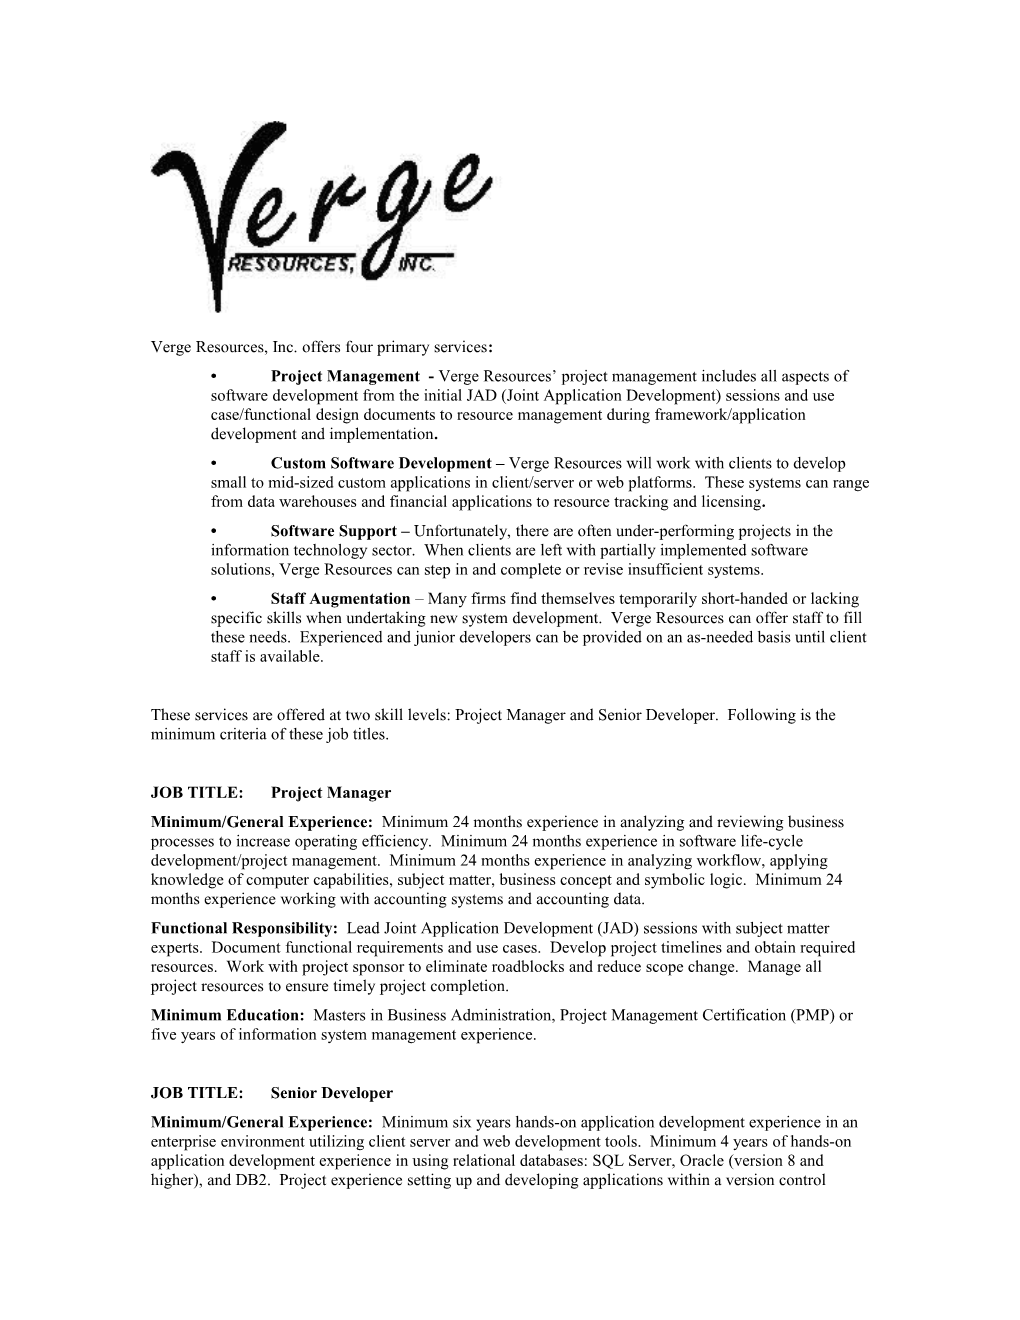 Verge Resources, Inc